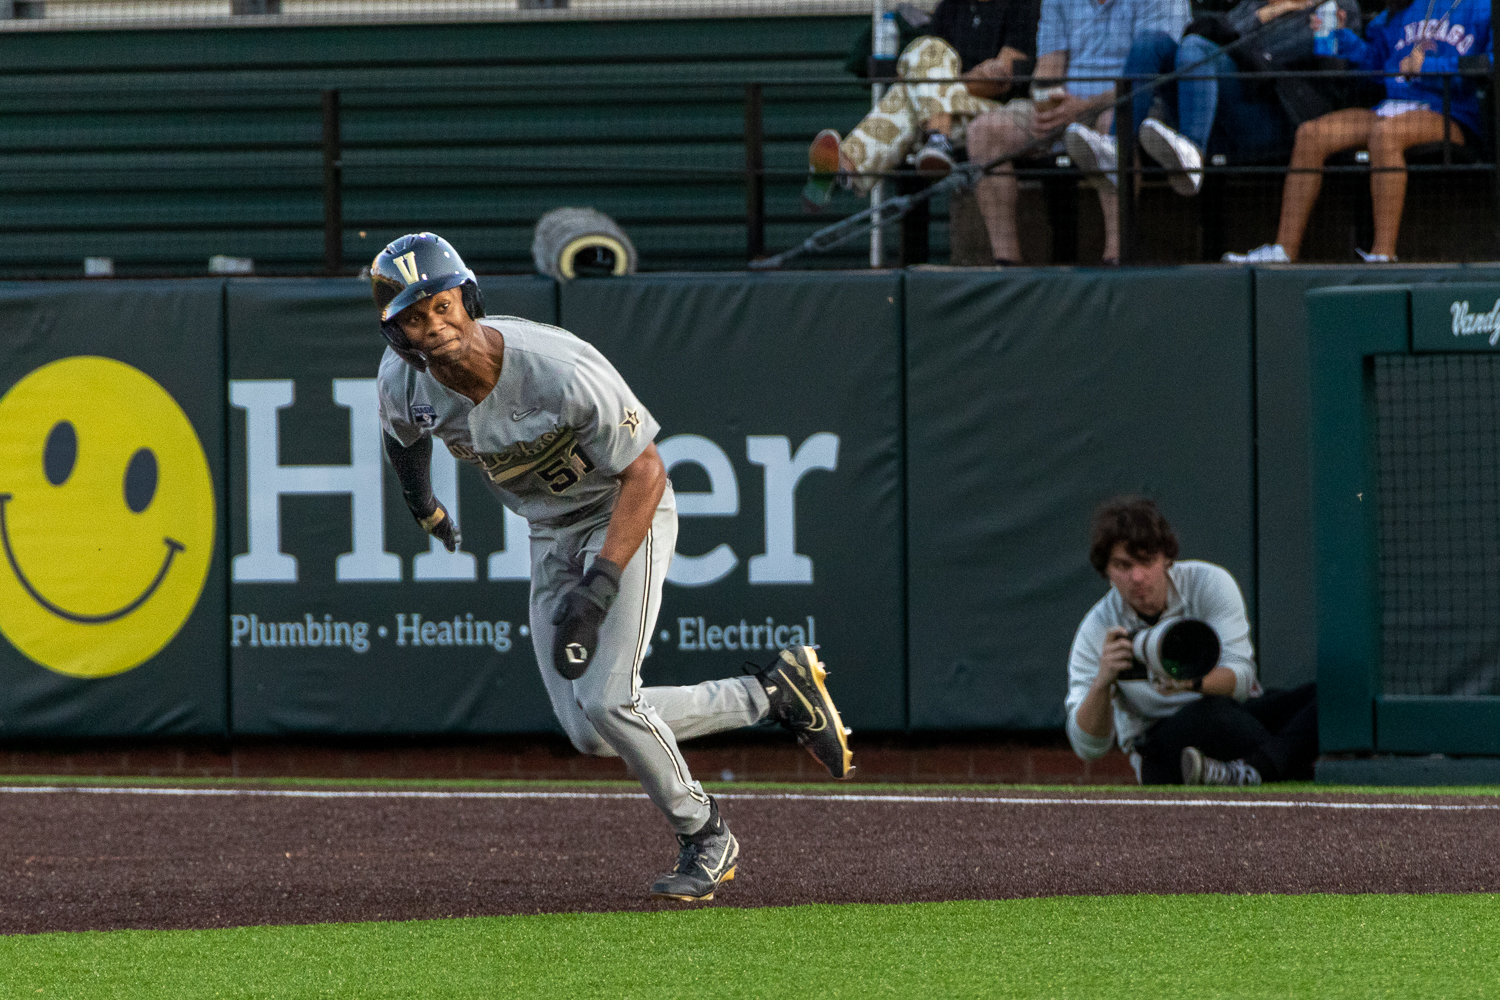 Vanderbilt baseball on a roll heading into NCAA Tournament, Baseball